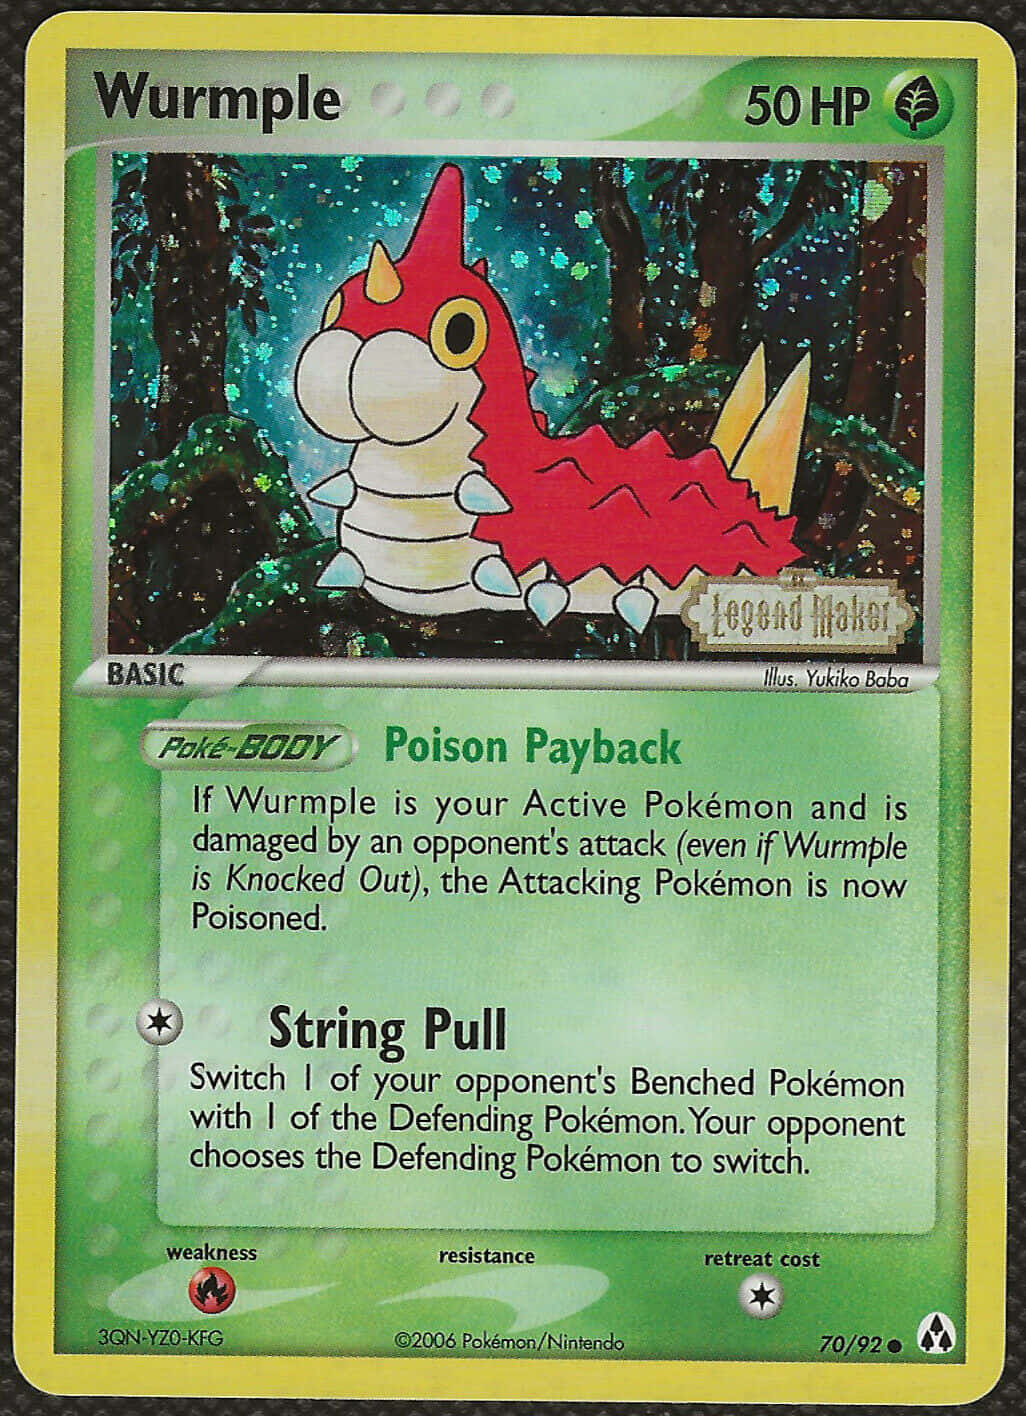 Poison Payback Pokémon Card Of Wurmple Wallpaper